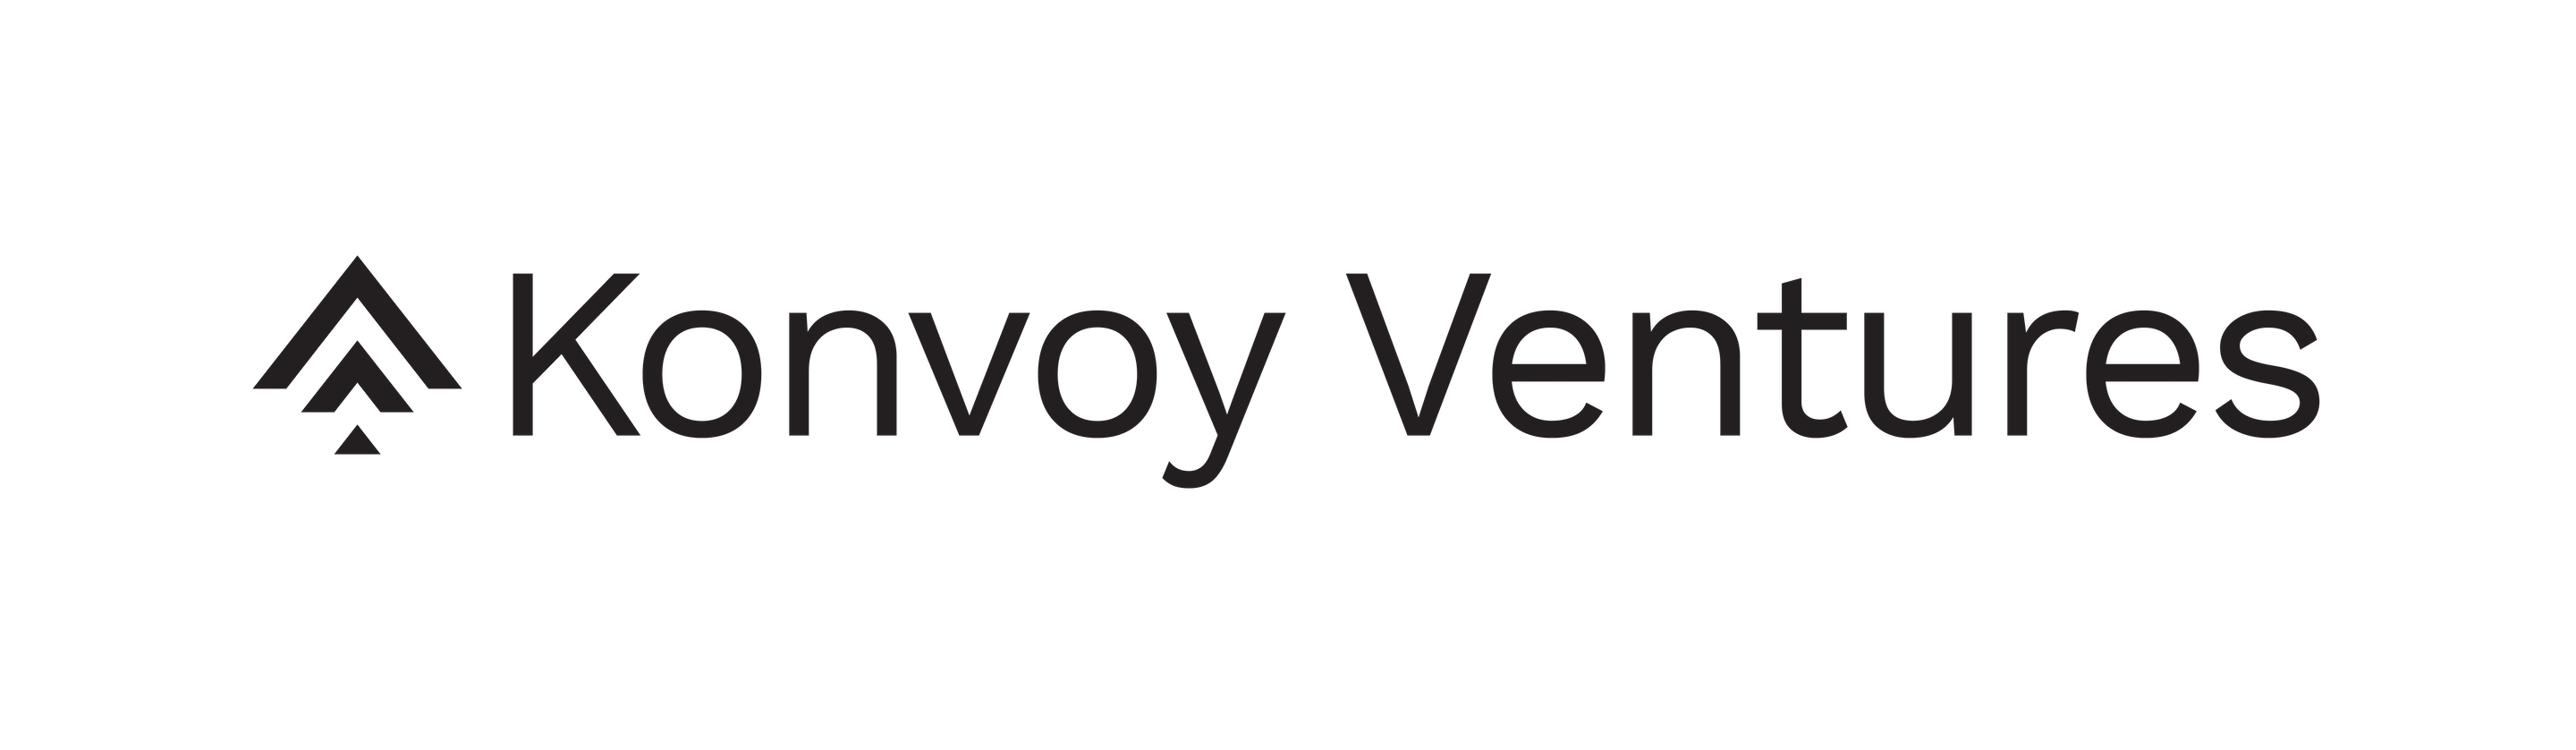 Konvoy Ventures